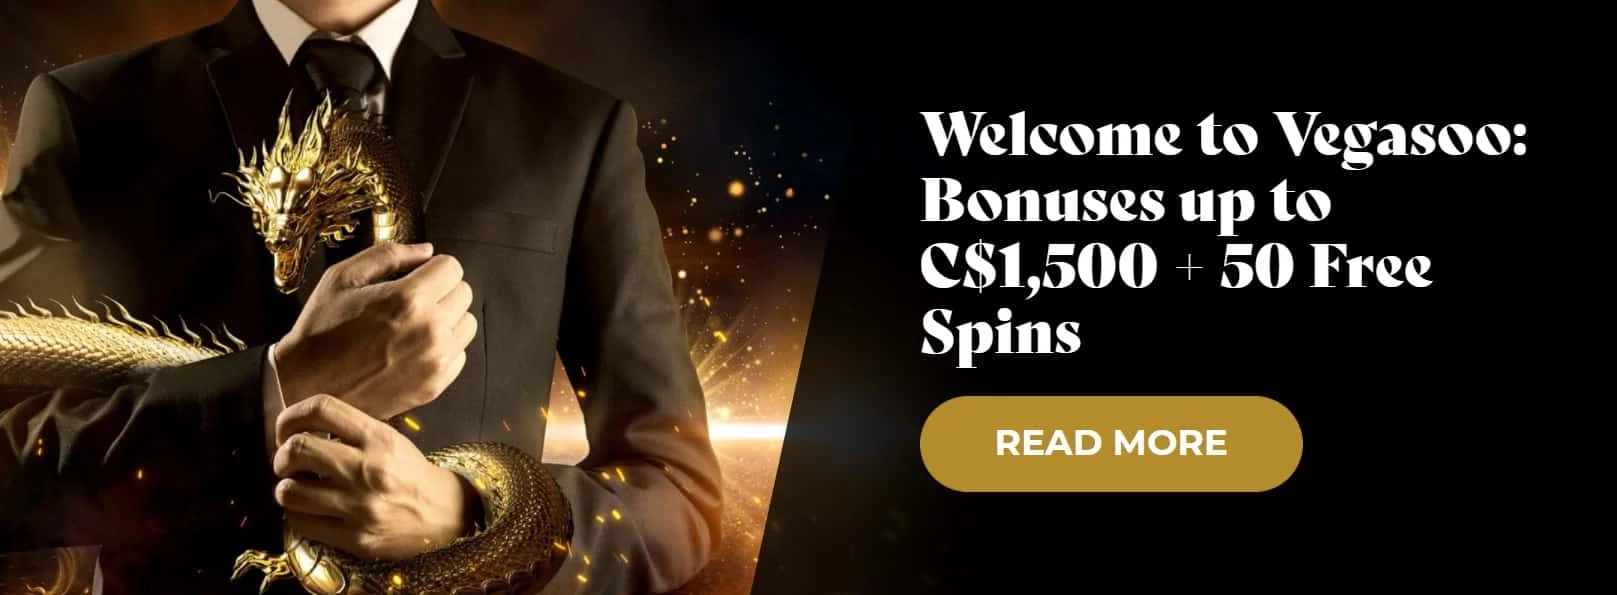 vegasoo casino welcome bonus